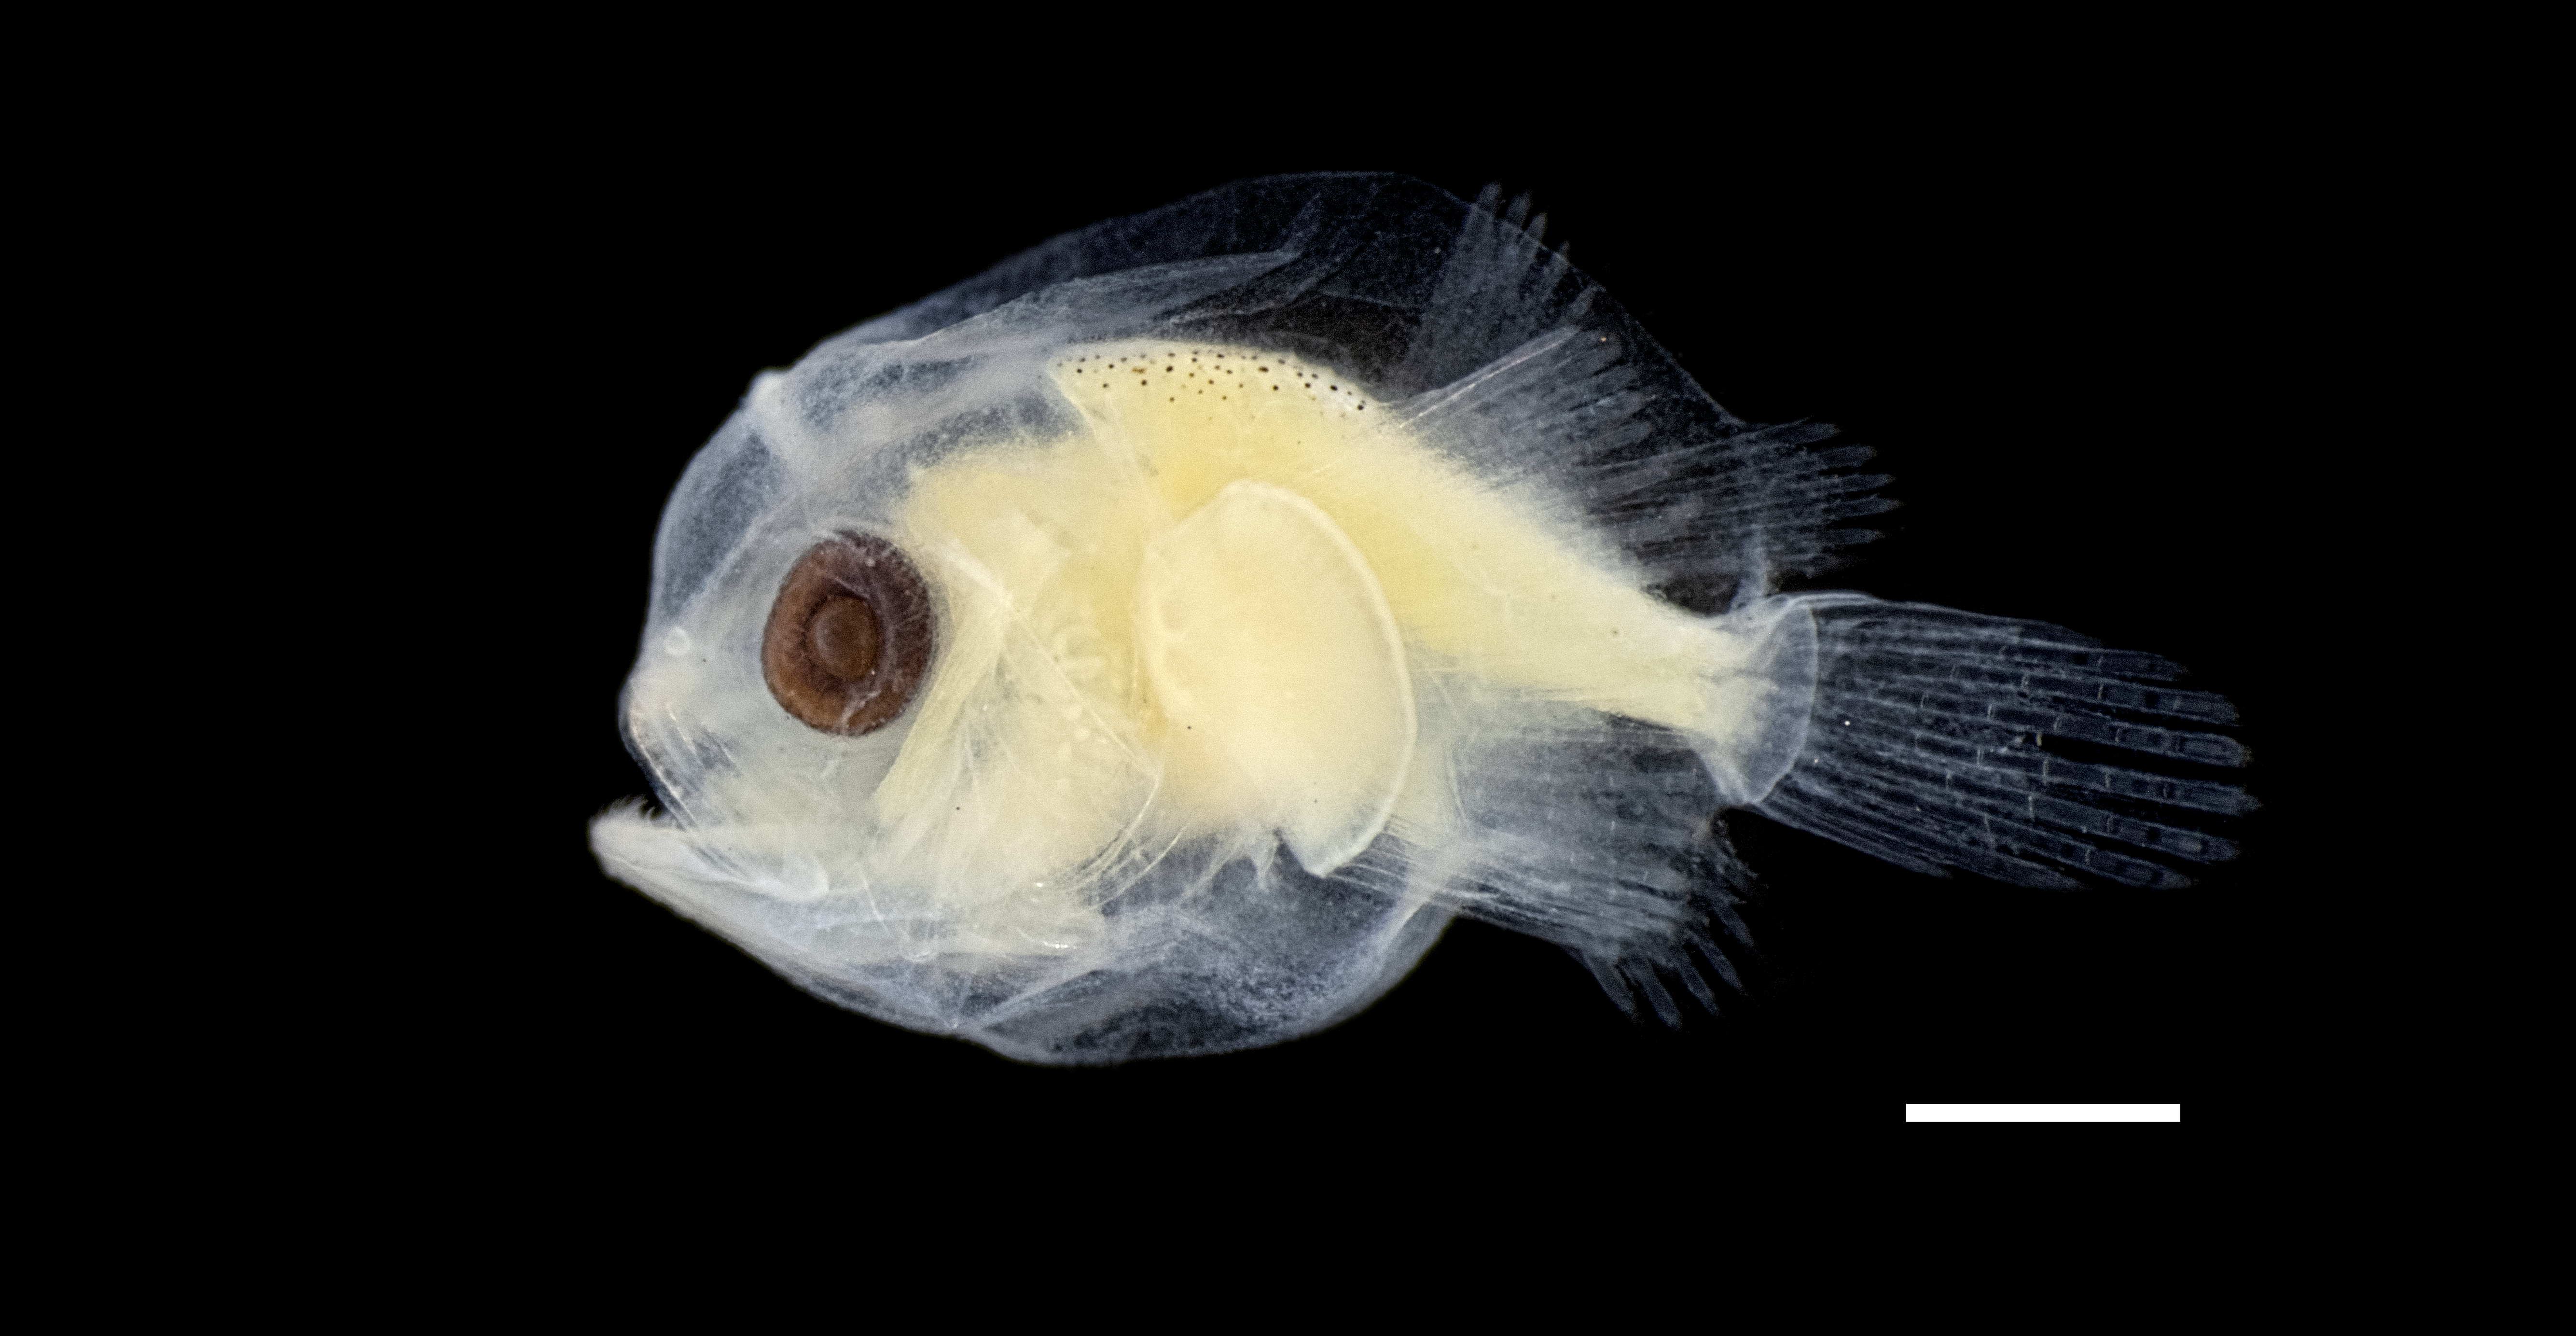 Larval Anglerfish - Gigantactis sp.